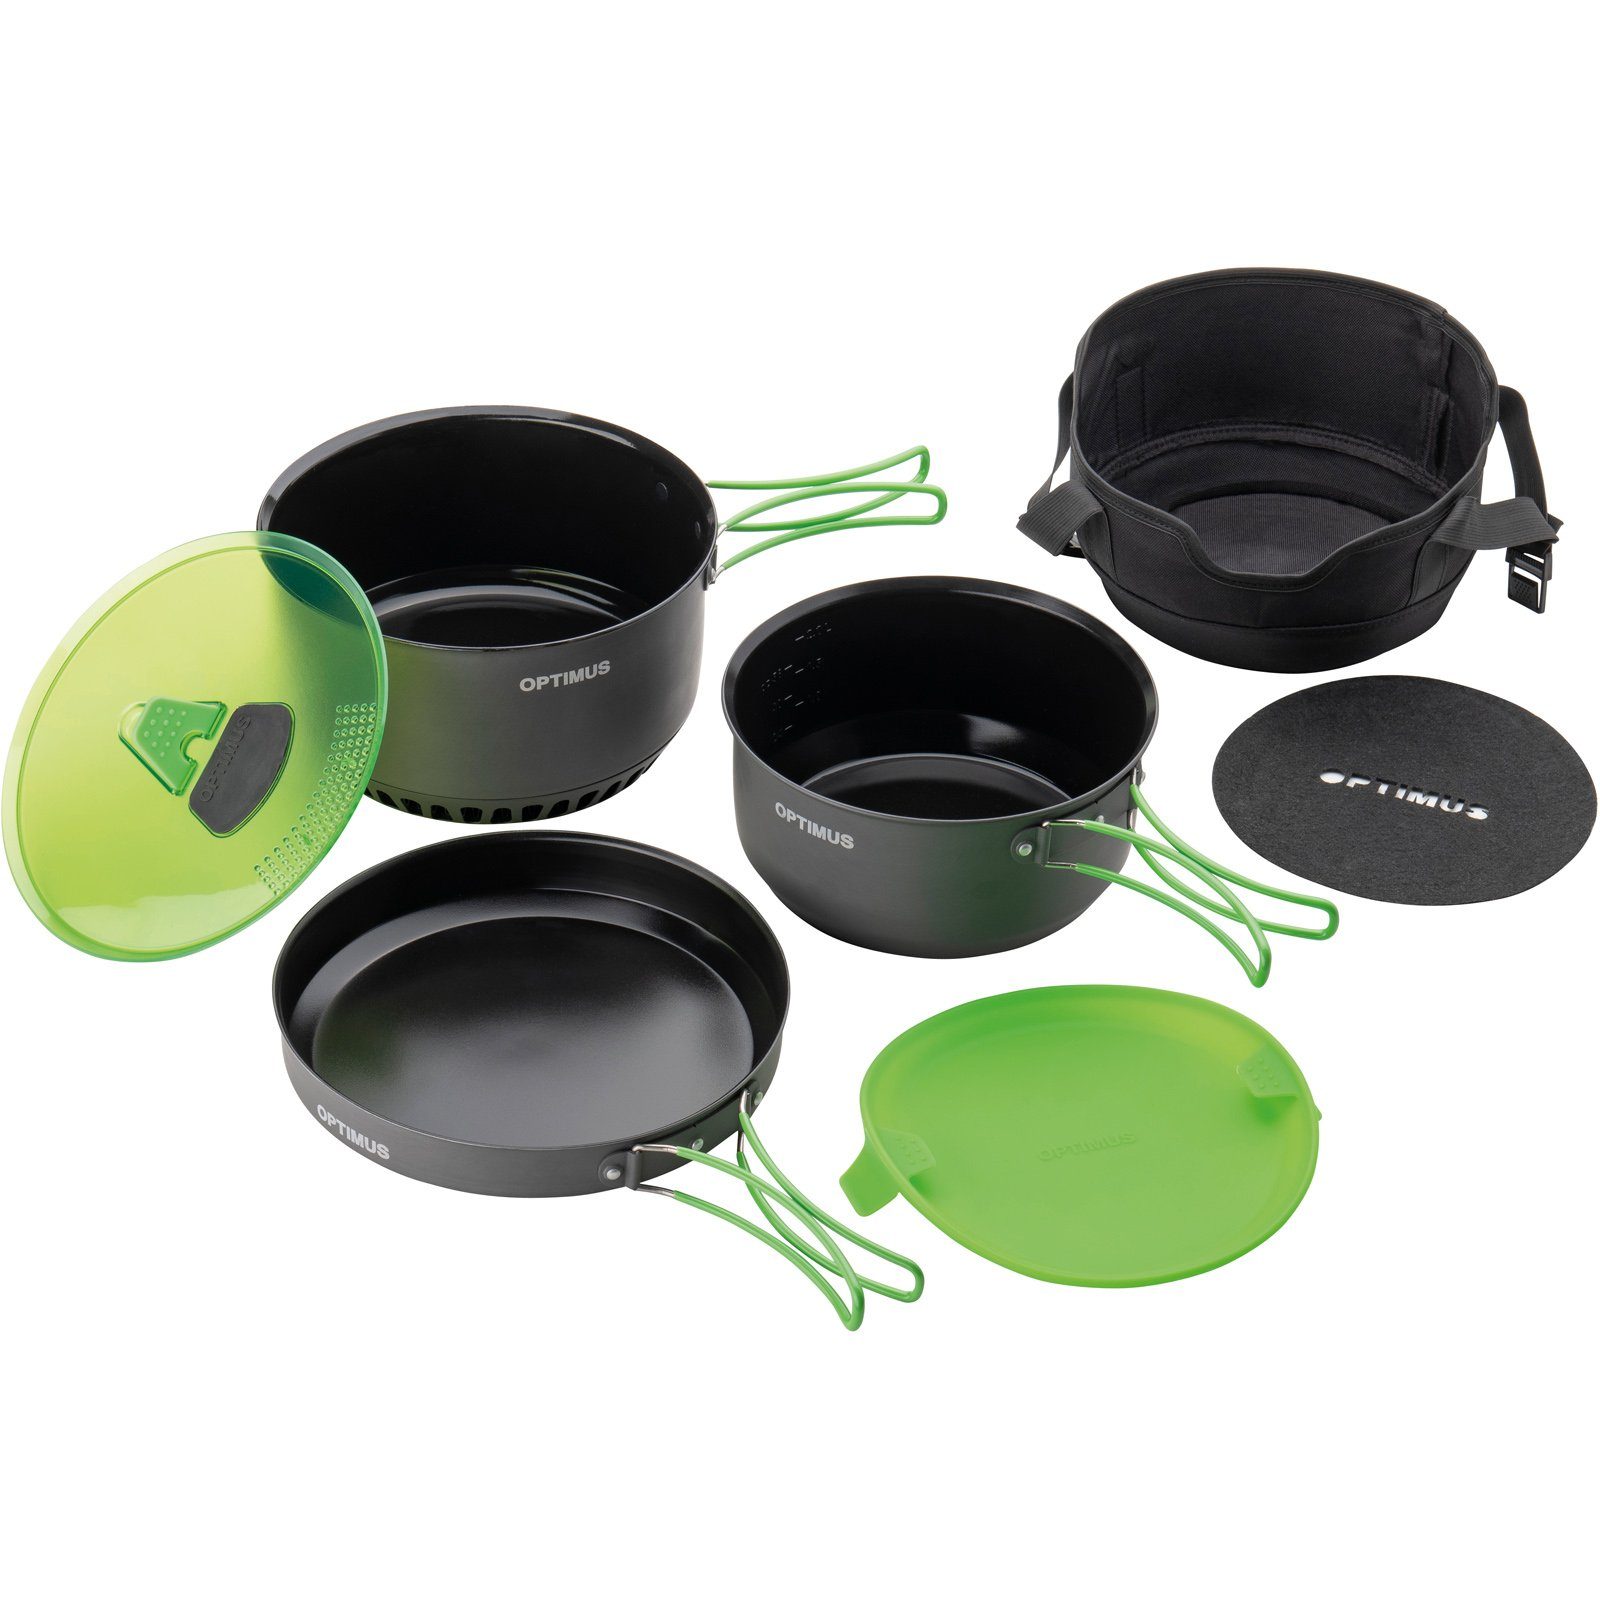 Terra schwarz Alu grün kg 1,16 Camping Topf-Set Küche Kochset Pfanne / OPTIMUS Camp 4 Topf Geschirr,